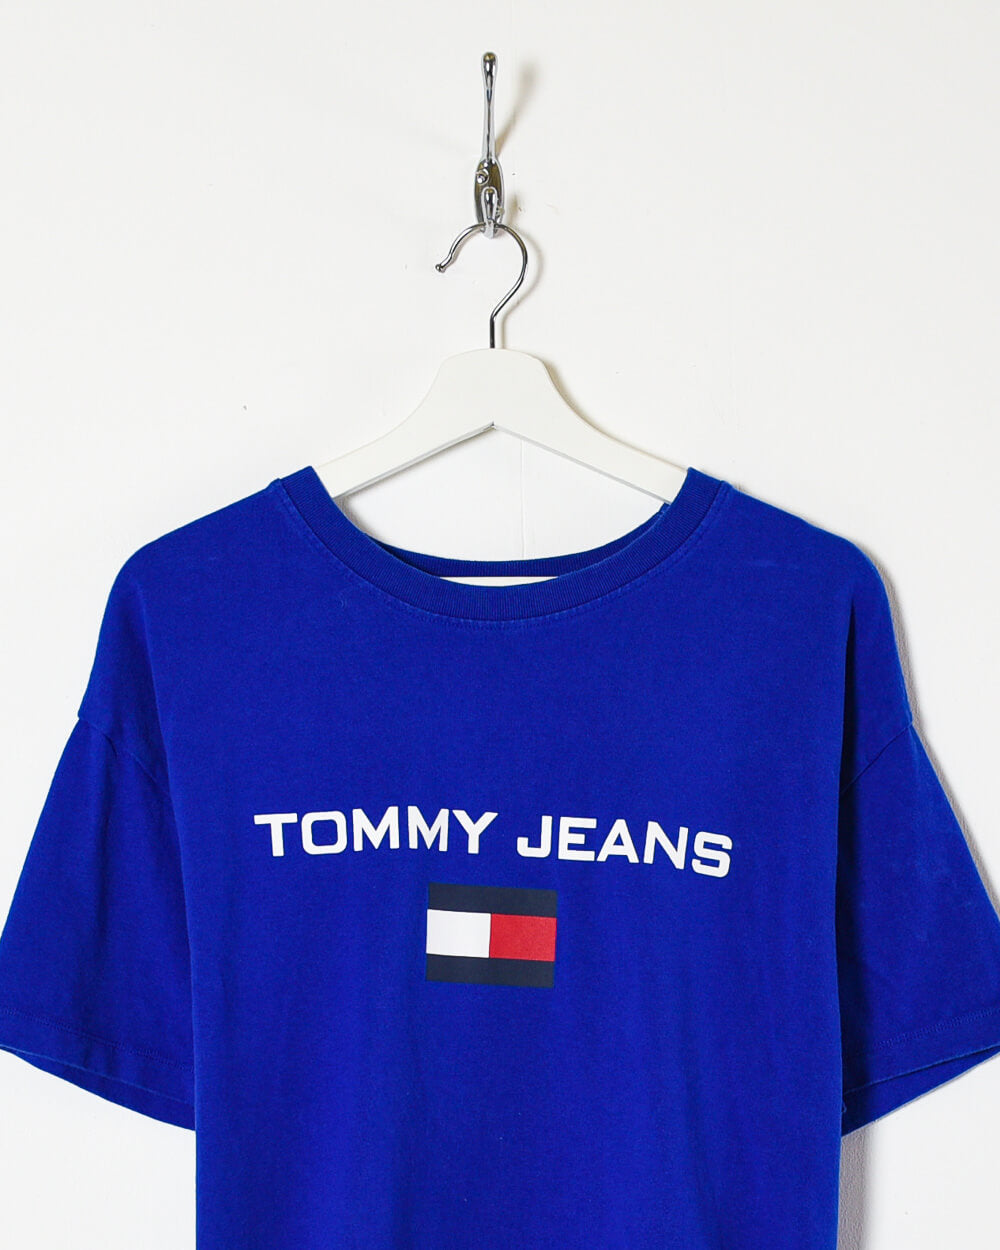 Blue Tommy Jeans Women's T-Shirt - Medium